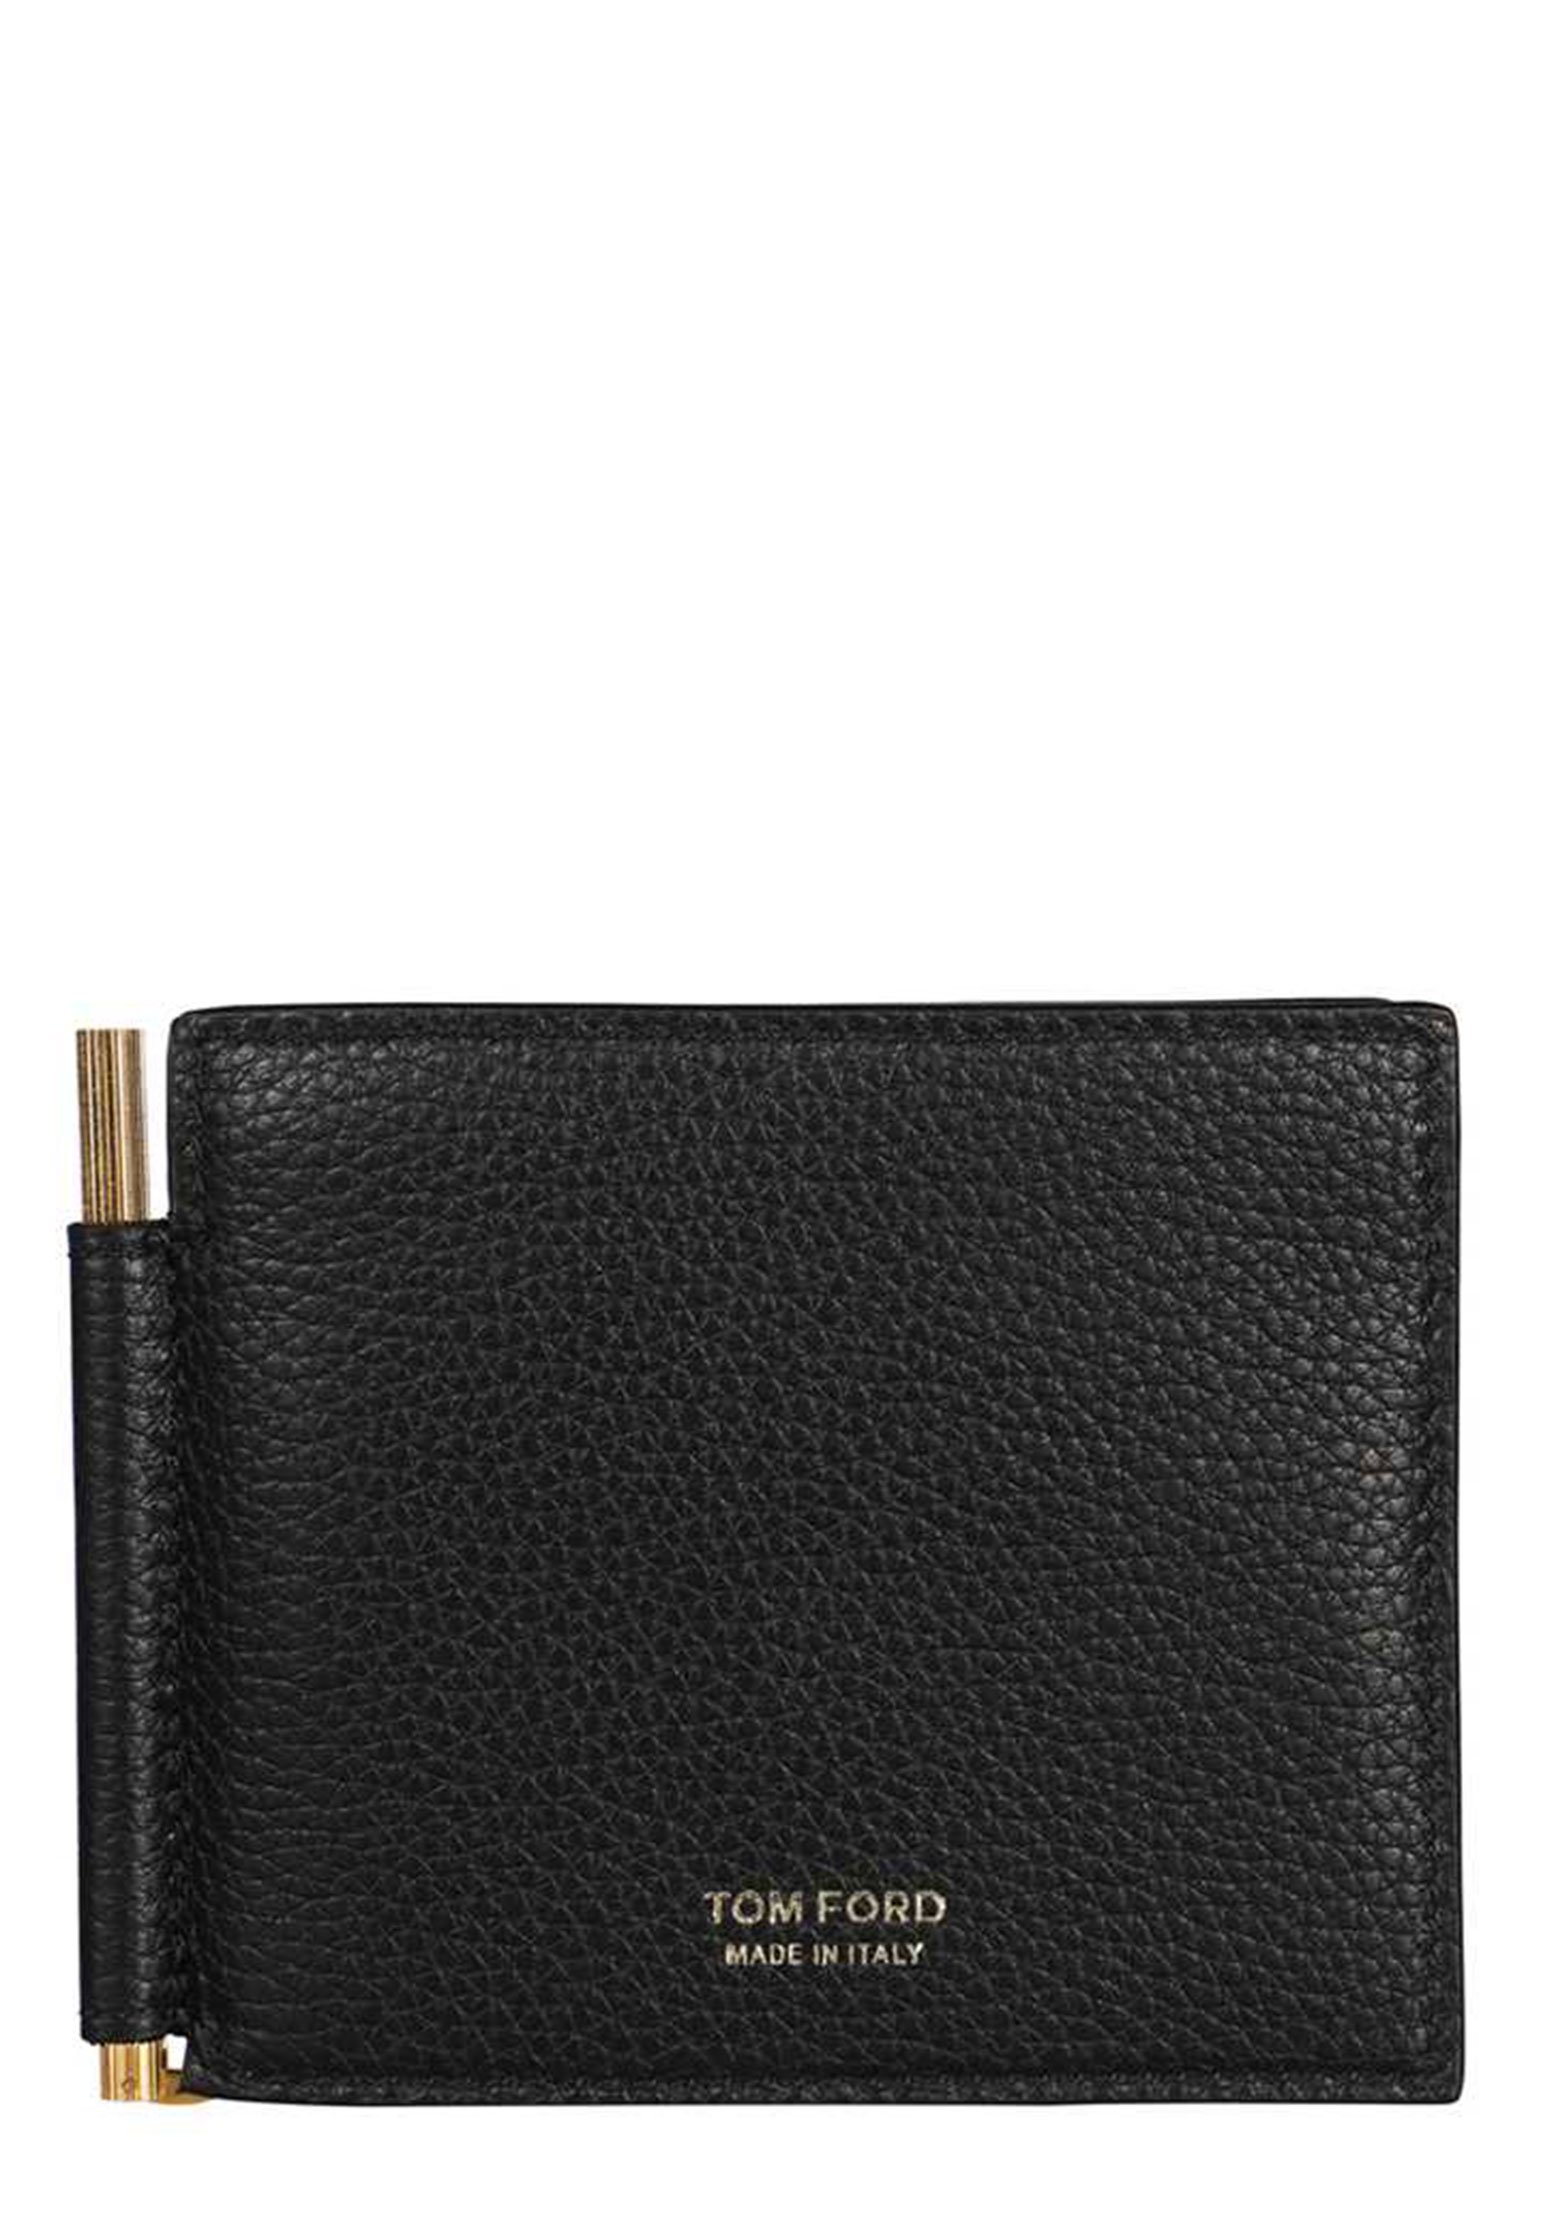 Wallet TOM FORD Color: black (Code: 376) in online store Allure